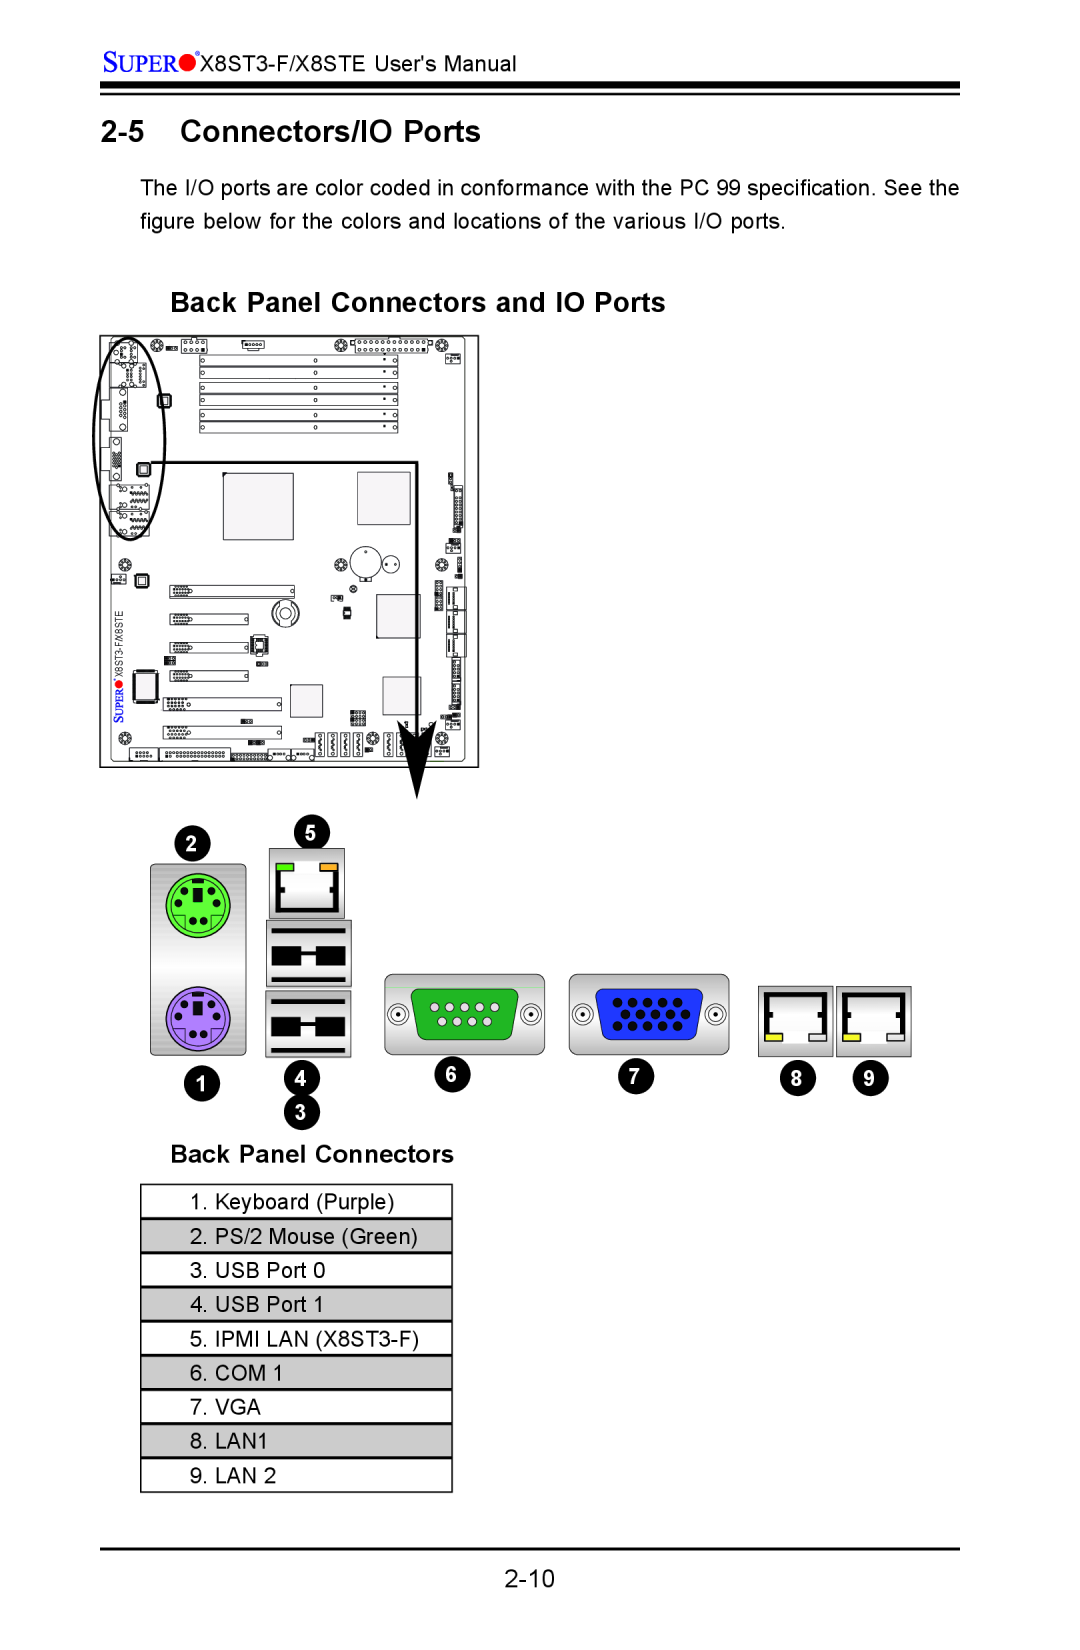 SUPER MICRO Computer user manual Connectors/IO Ports, Back Panel Connectors and IO Ports, 2-10, X8ST3-F/X8STE 